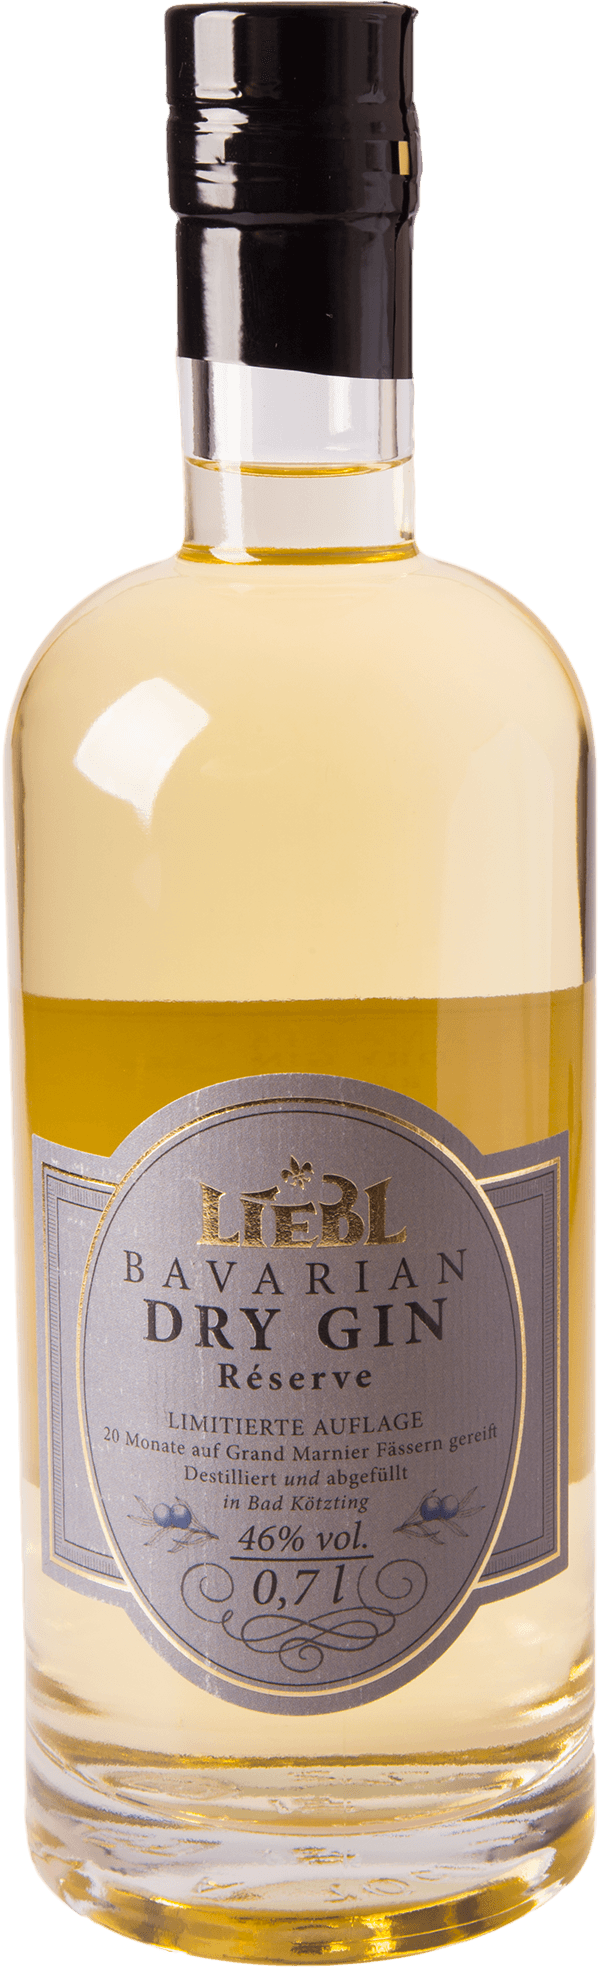 Liebl´s Bavarian Dry Grand Marnier Gin 46% 0,7 l